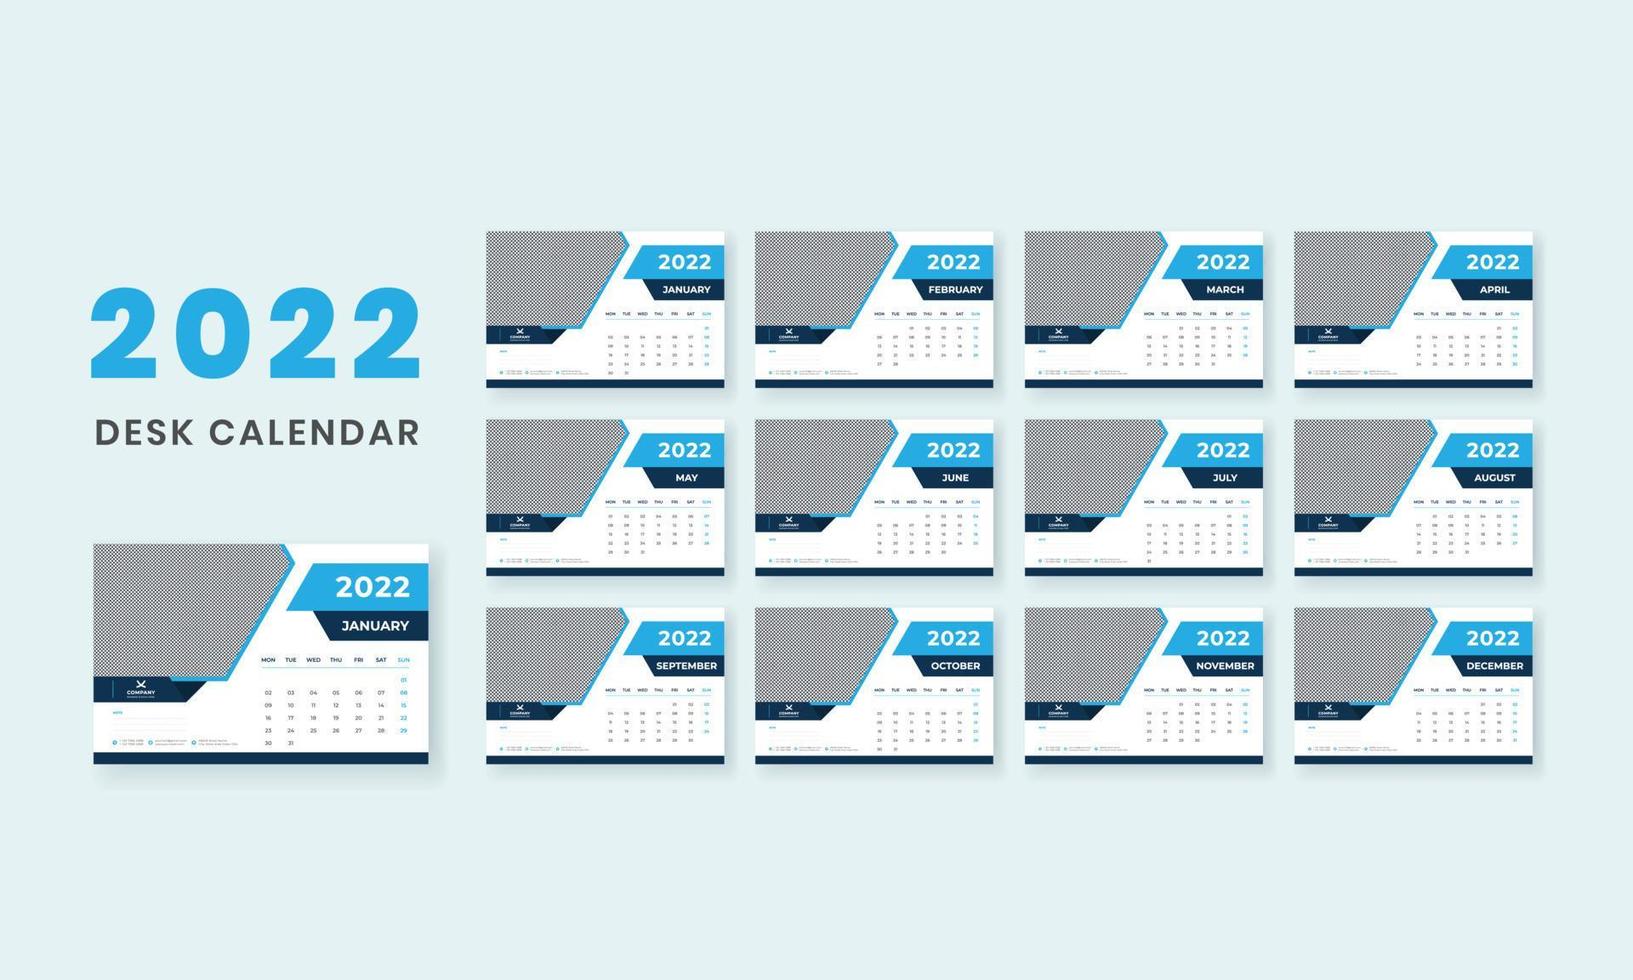 Desk Calendar 2022 Template Design vector